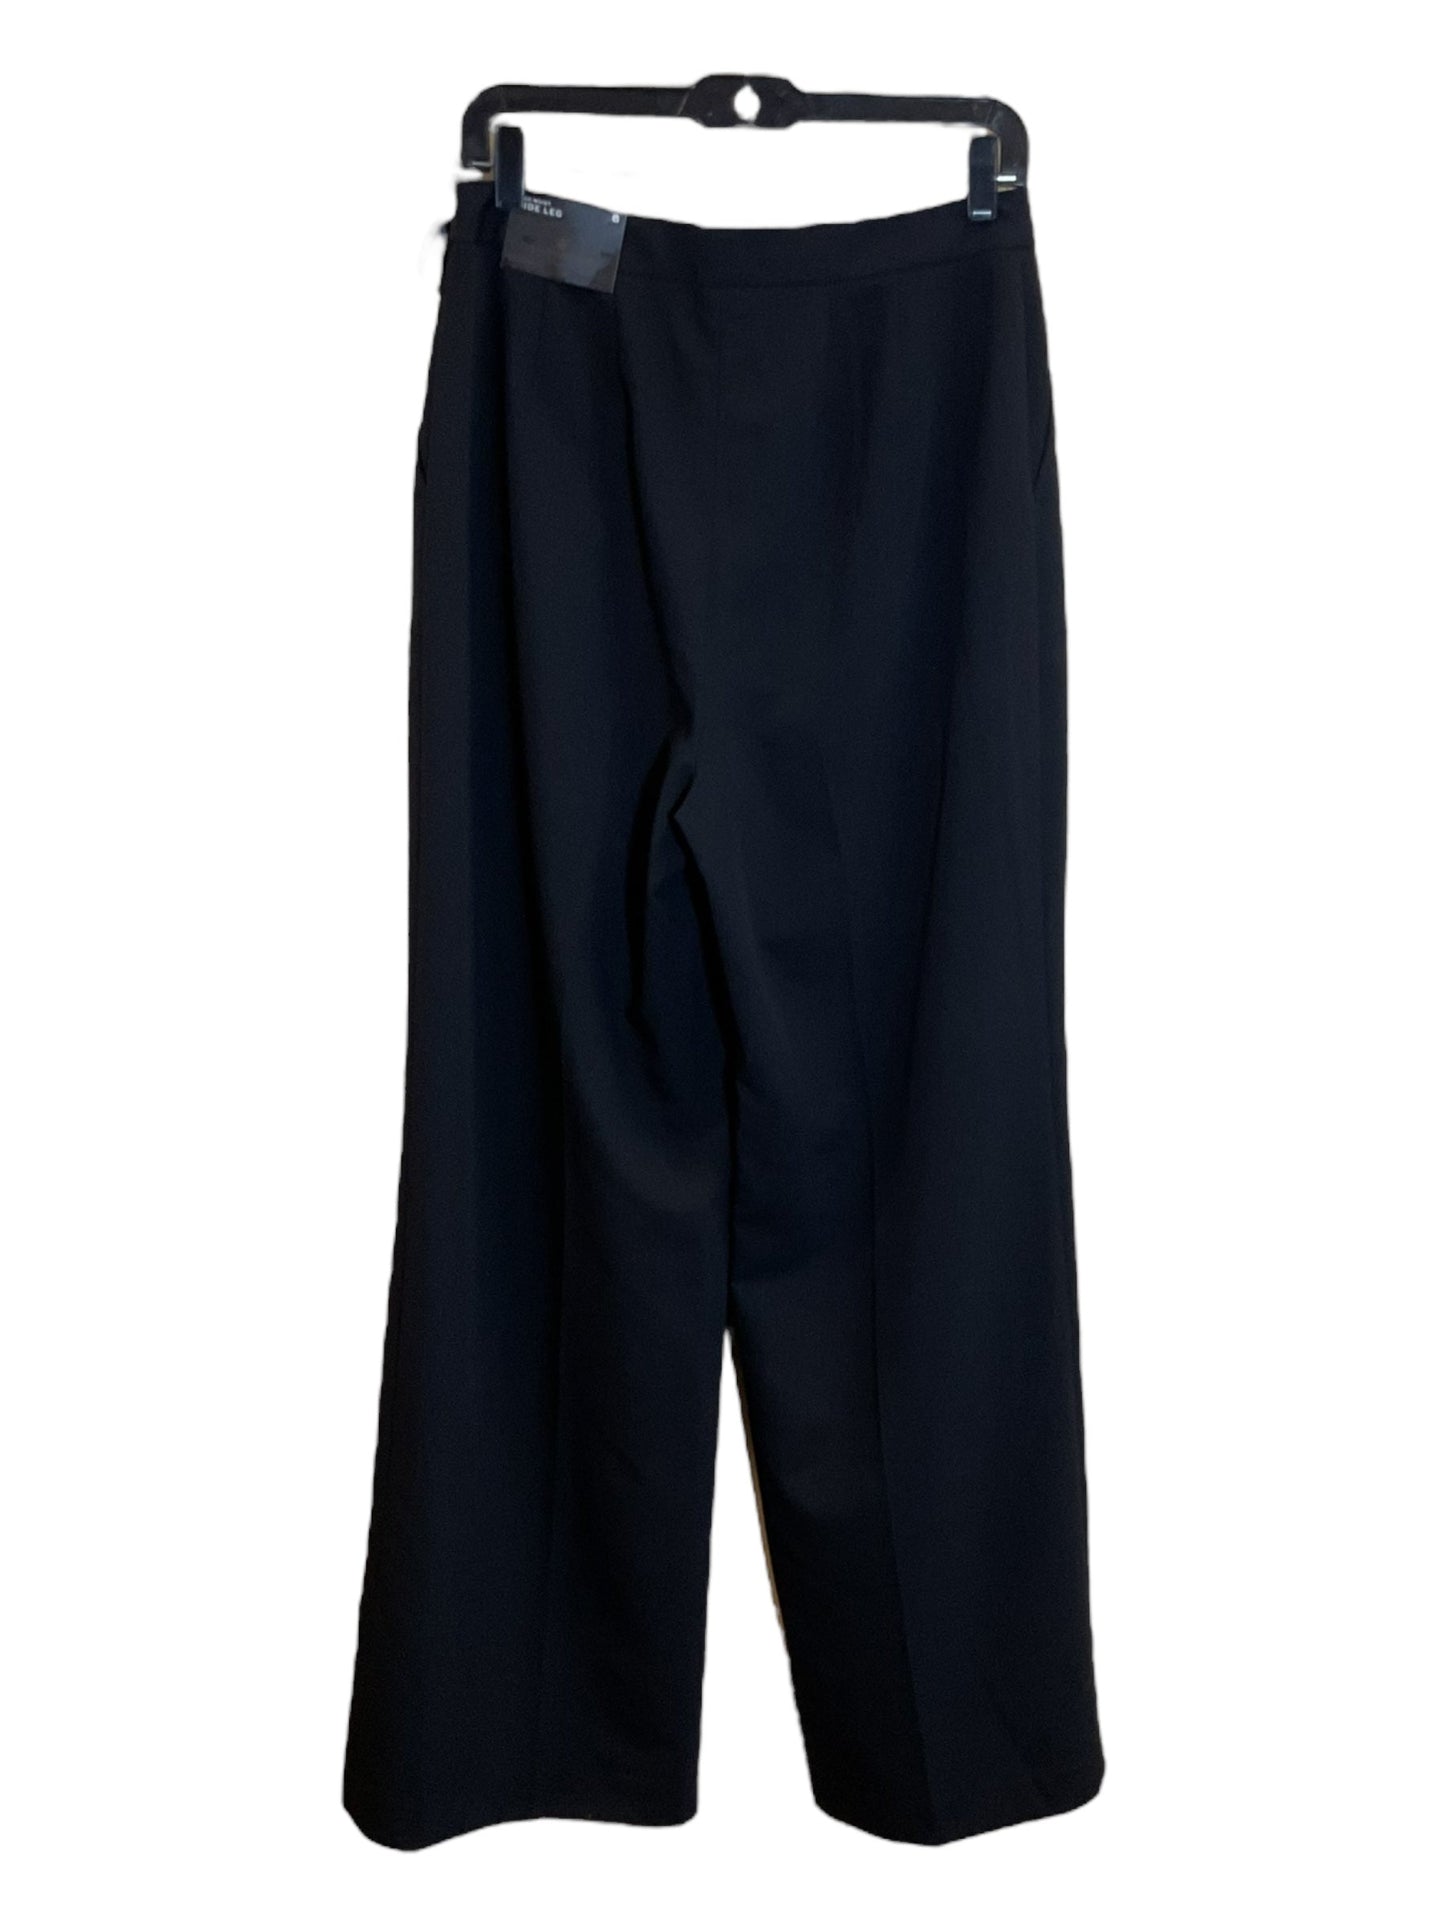 Black Pants Work/dress Worthington, Size 8